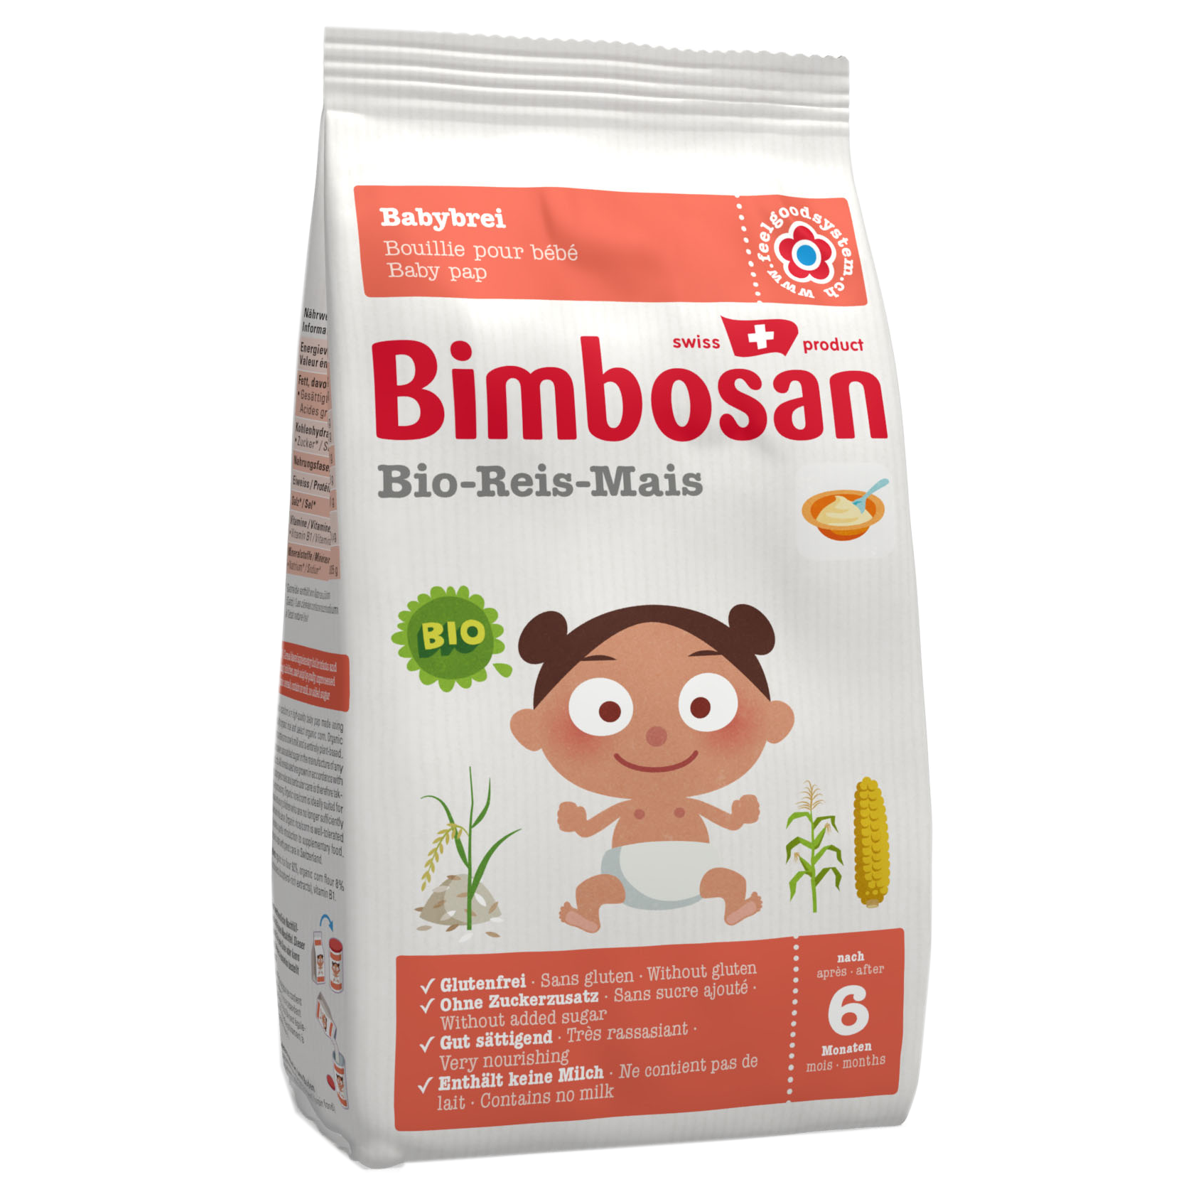 Bimbosan Bio-Reis-Mais refill 400 g